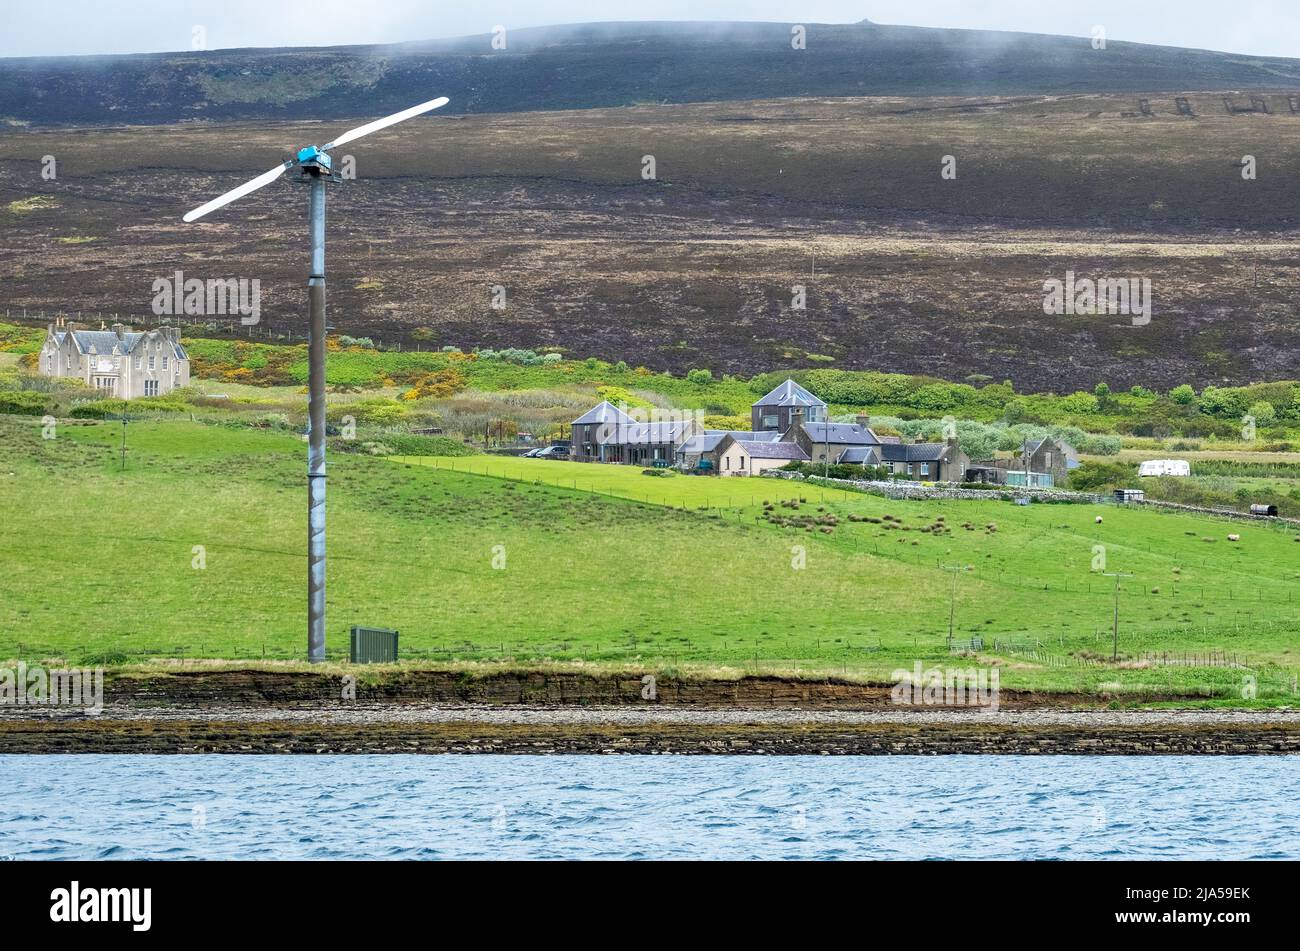 Turbina eolica sull'isola di Rousay, Isole Orkney, Scozia Foto Stock